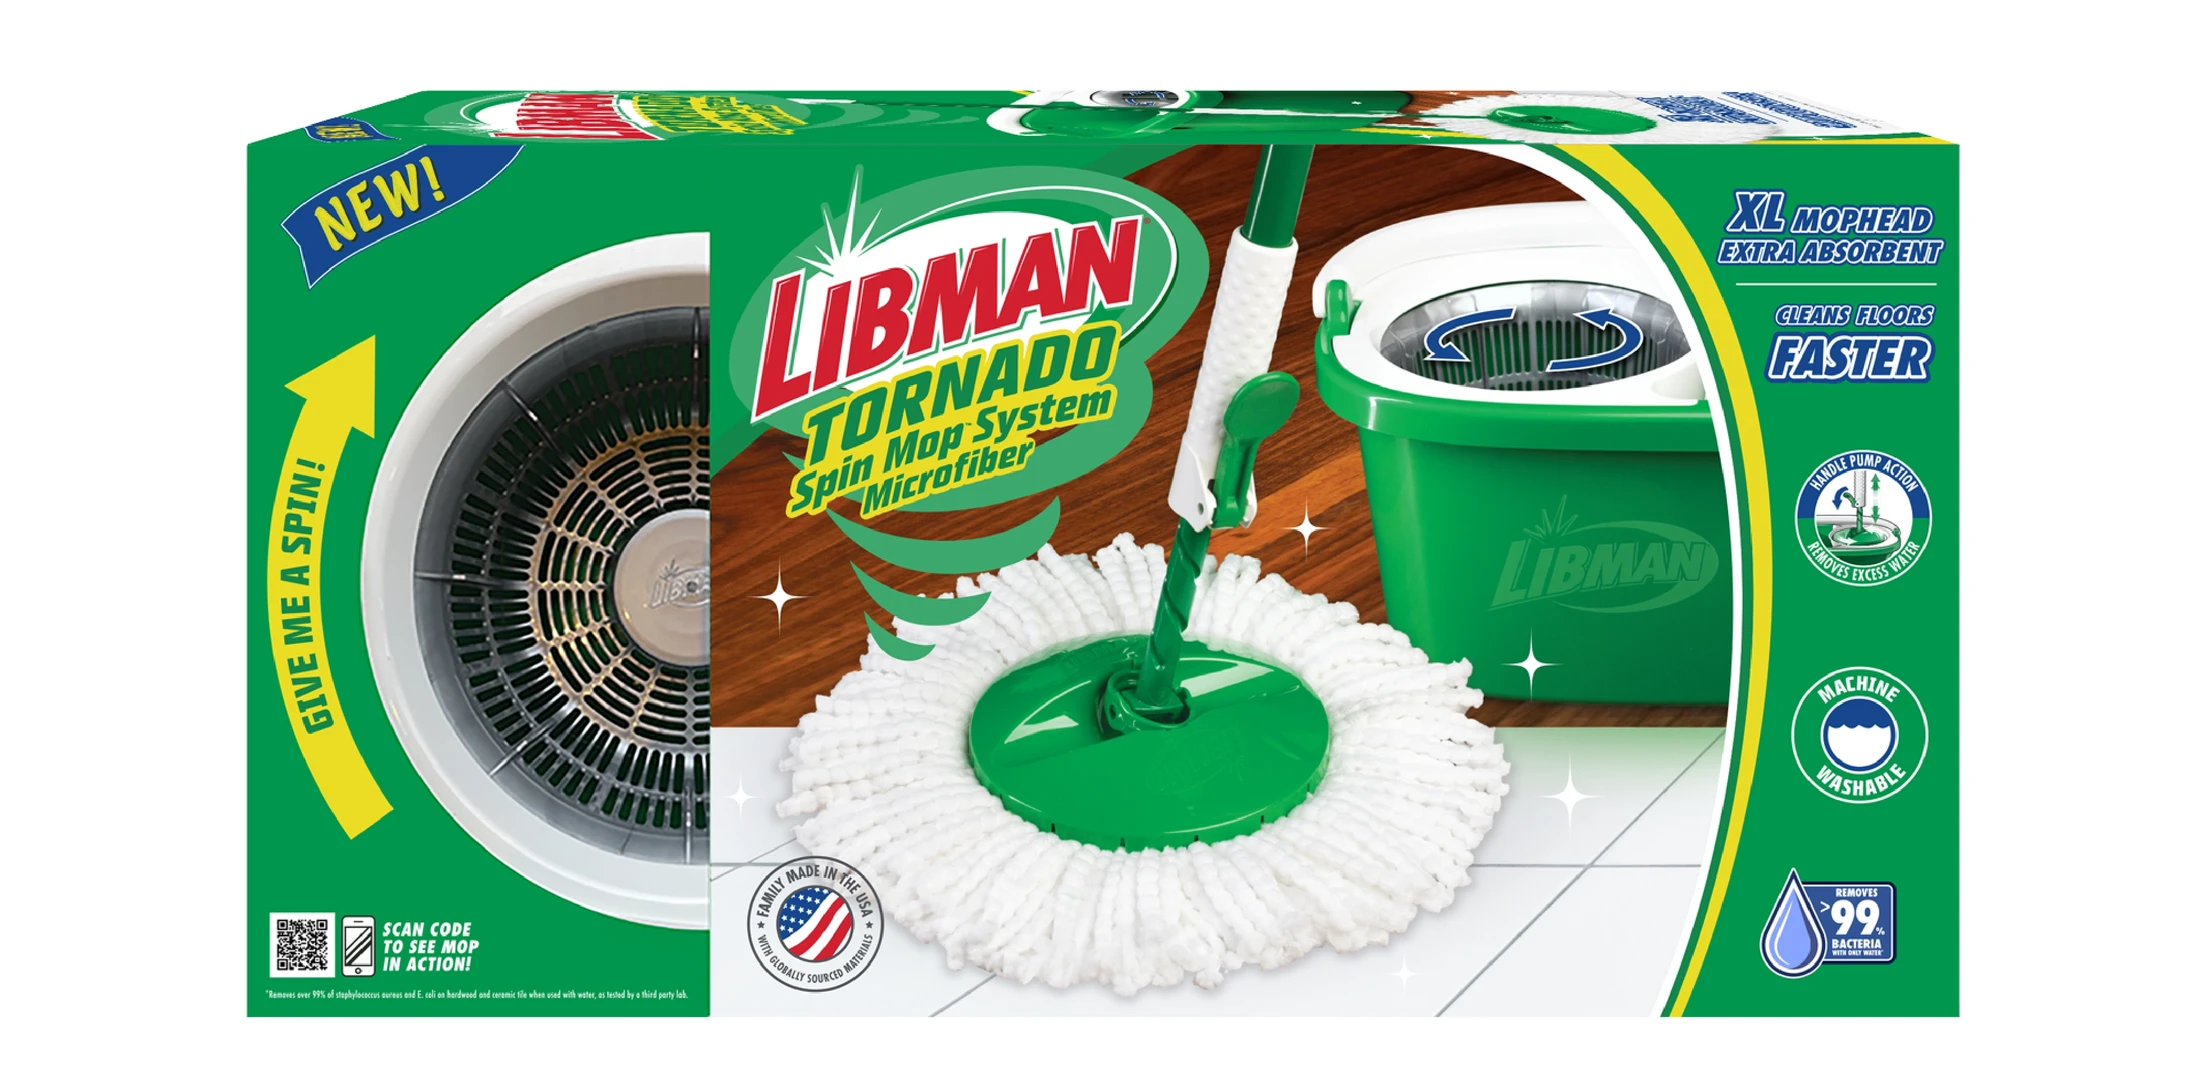 Libman mop and mop set.